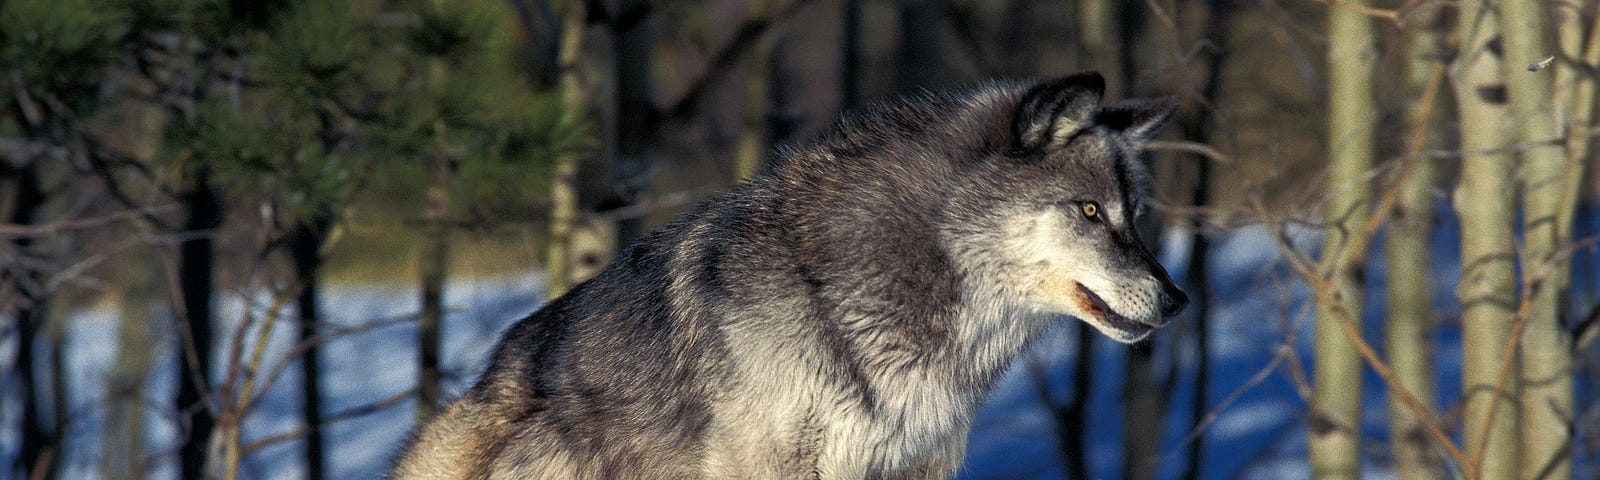 A wolf runs through snow in the woods. Depositphotos.